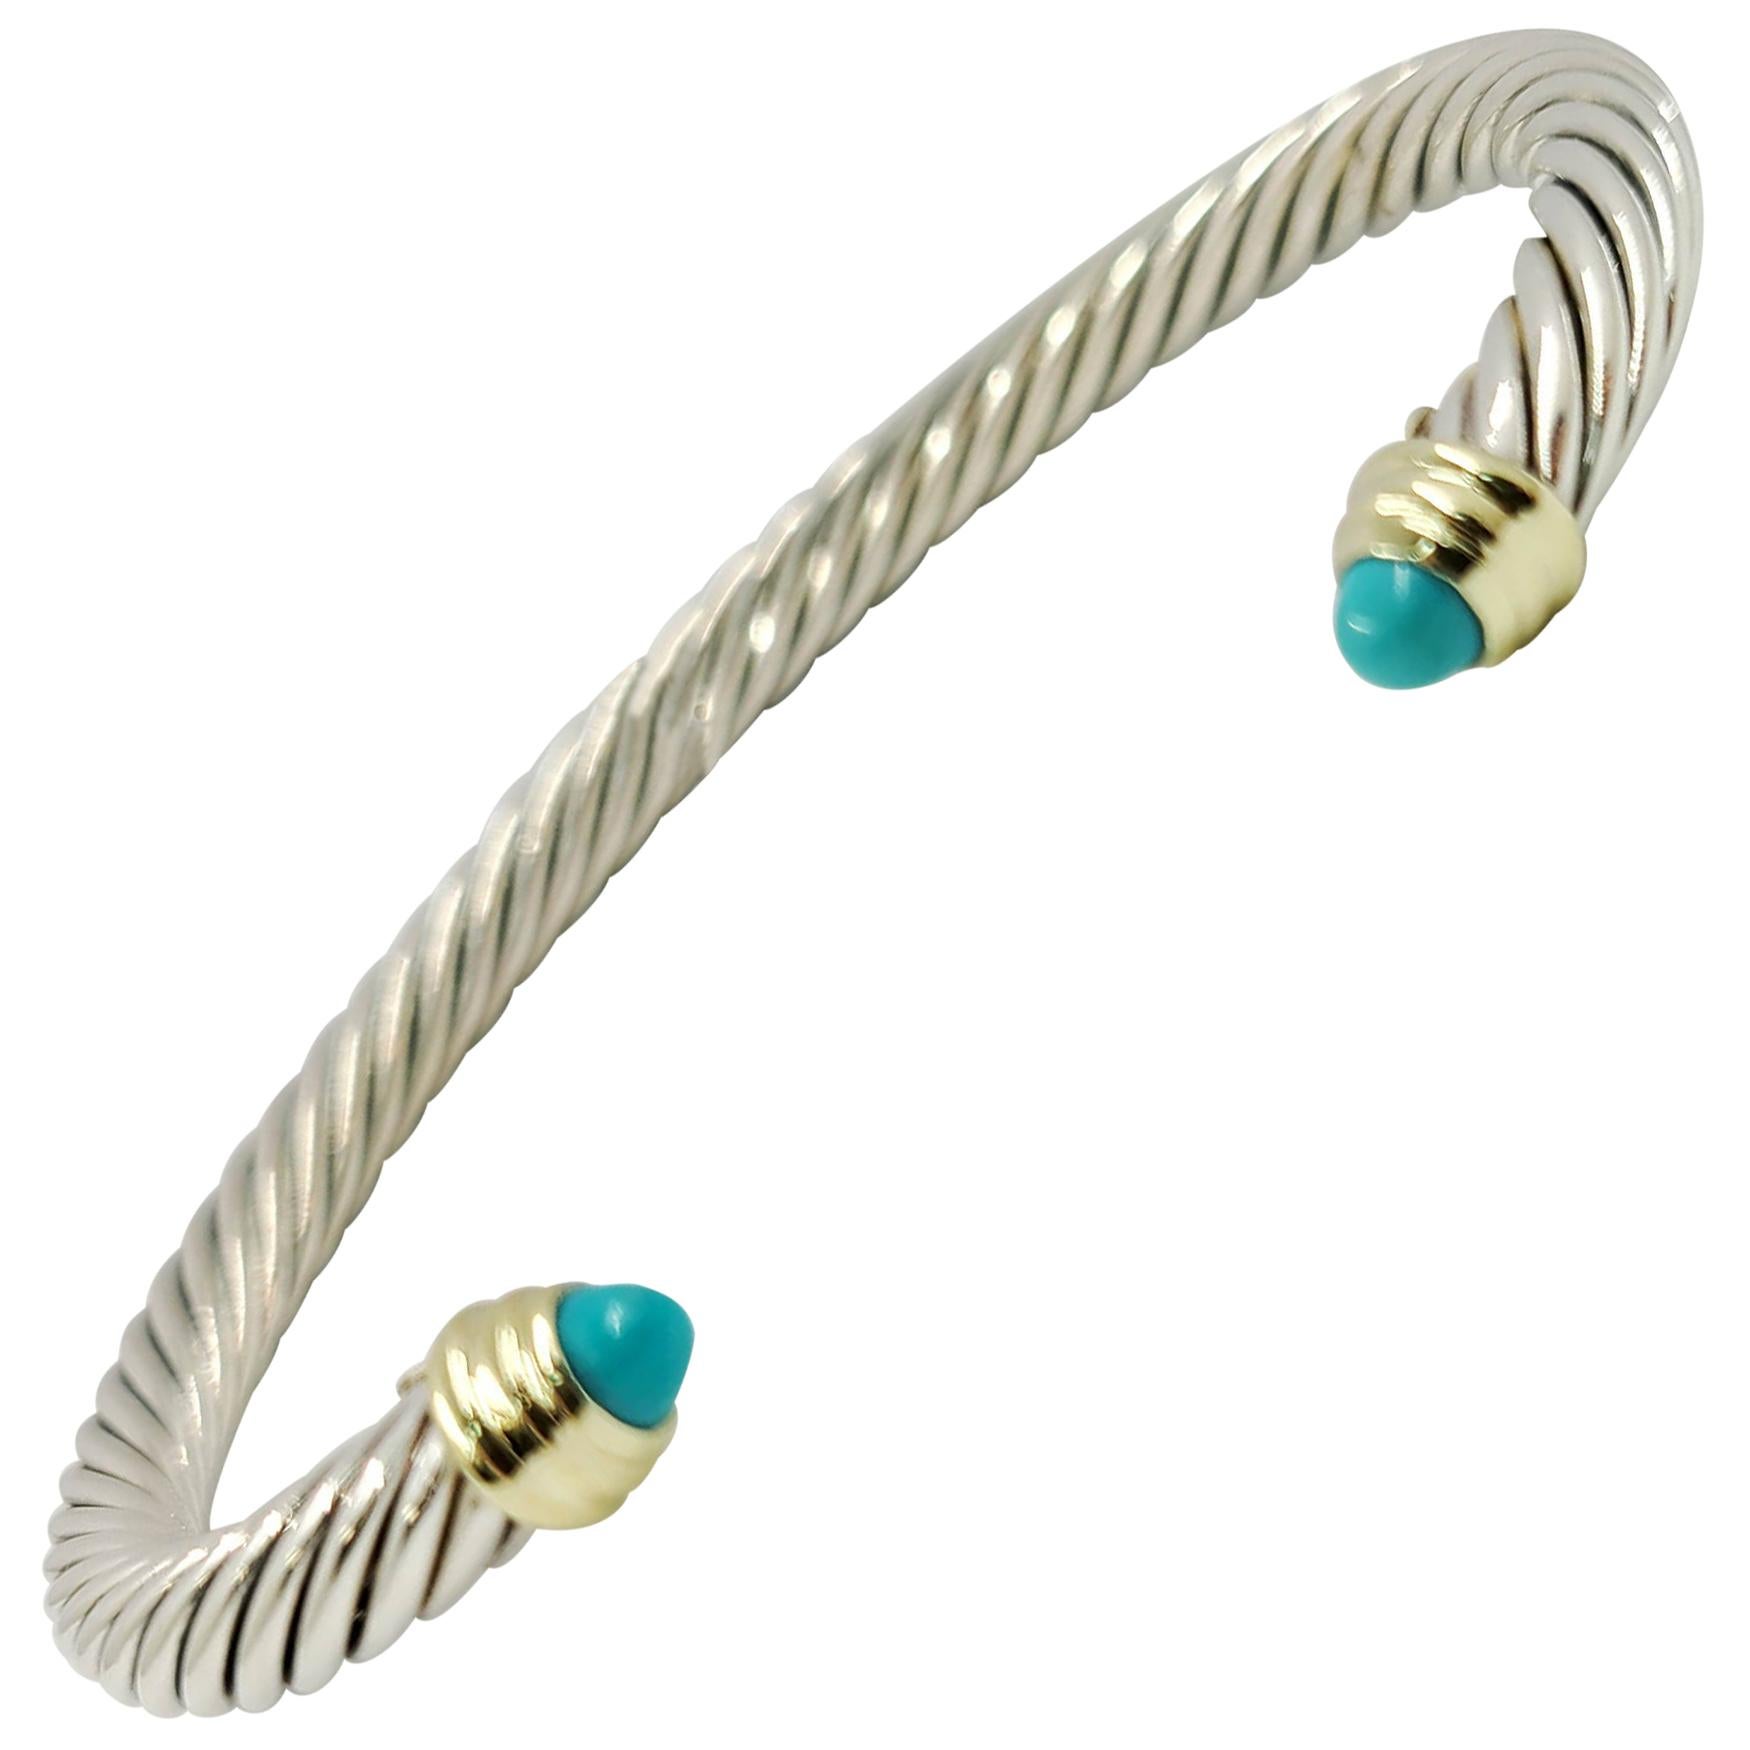 David Yurman Turquoise Cable Cuff